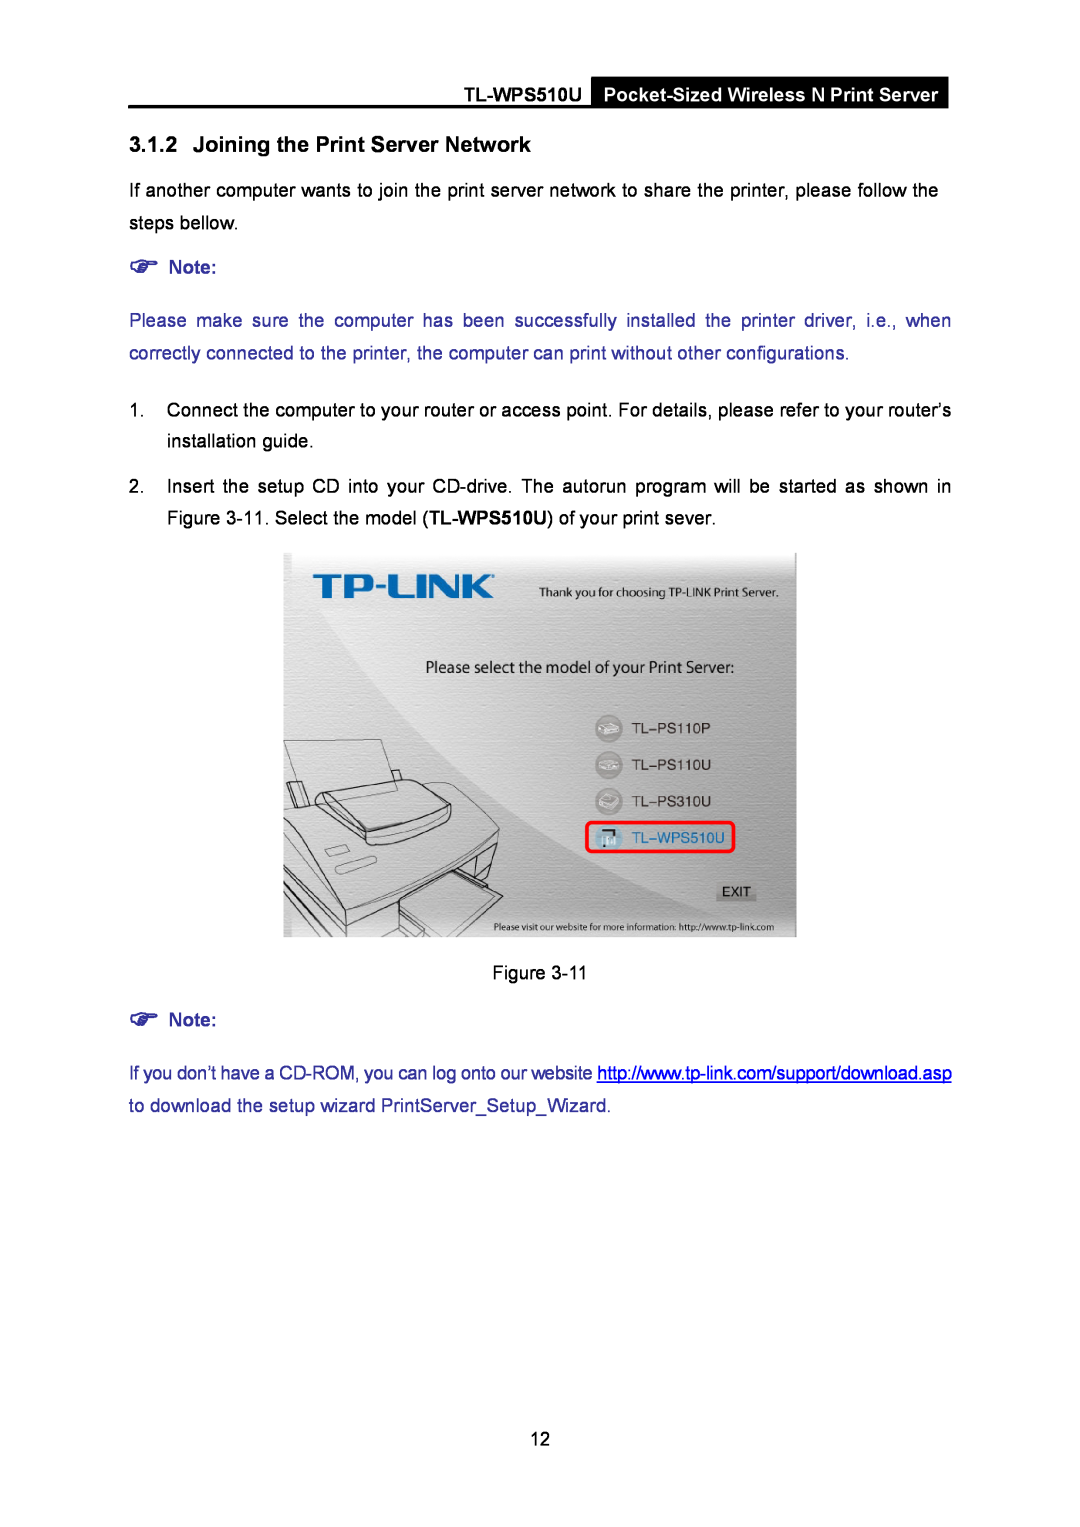 TP-Link tl-wps510u manual Joining the Print Server Network, TL-WPS510U Pocket-Sized Wireless N Print Server 